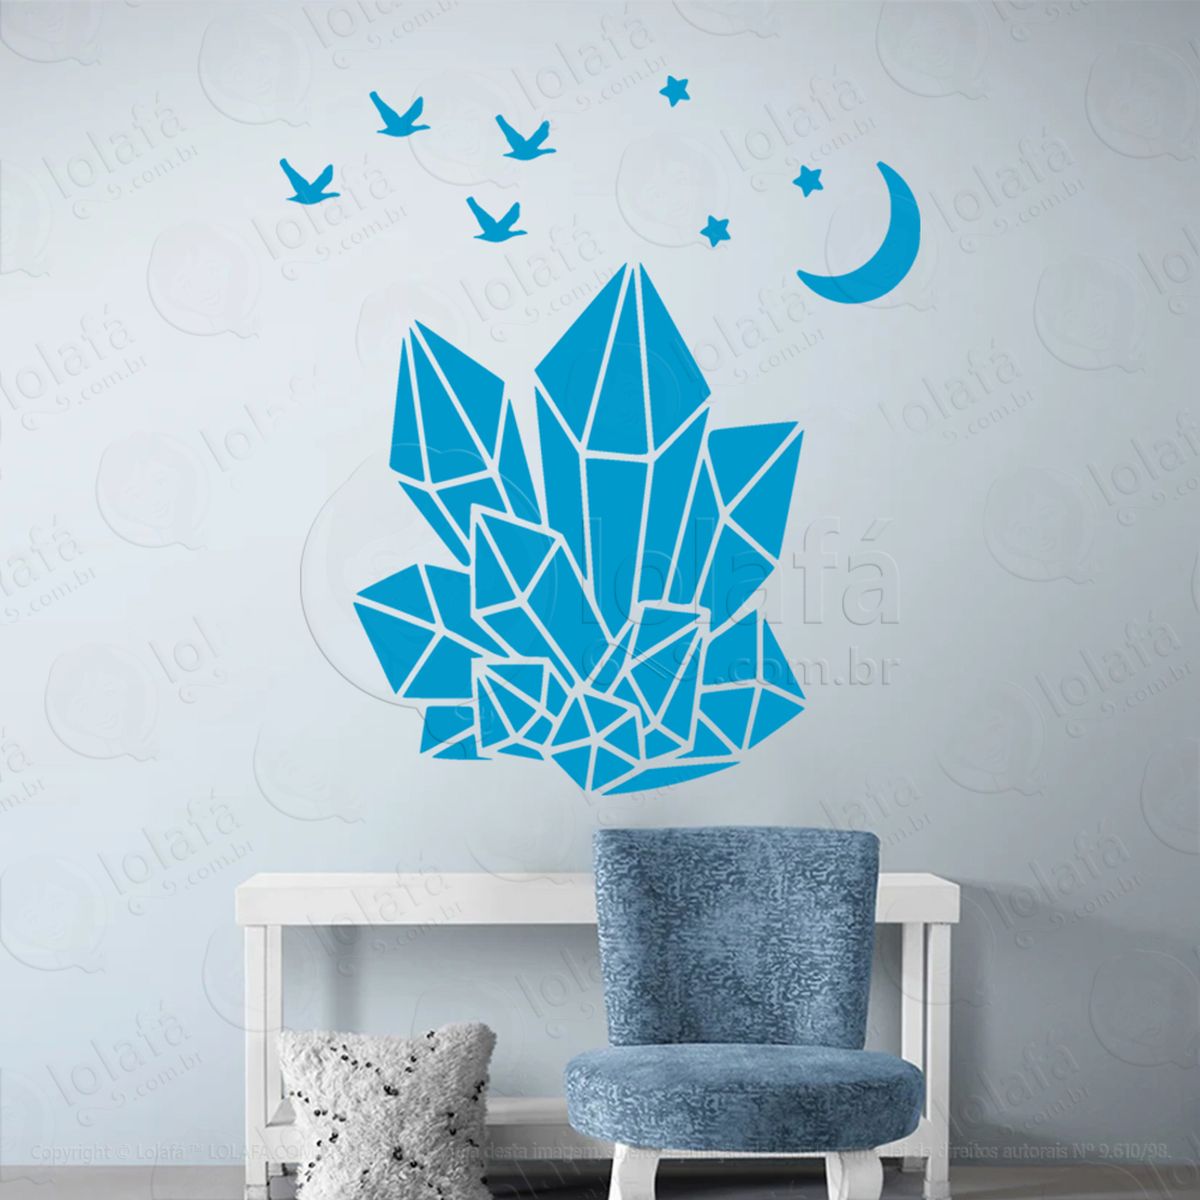 cristais e lua crystals and moon adesivo de parede decorativo para casa, sala, quarto, vidro e altar ocultista - mod:14